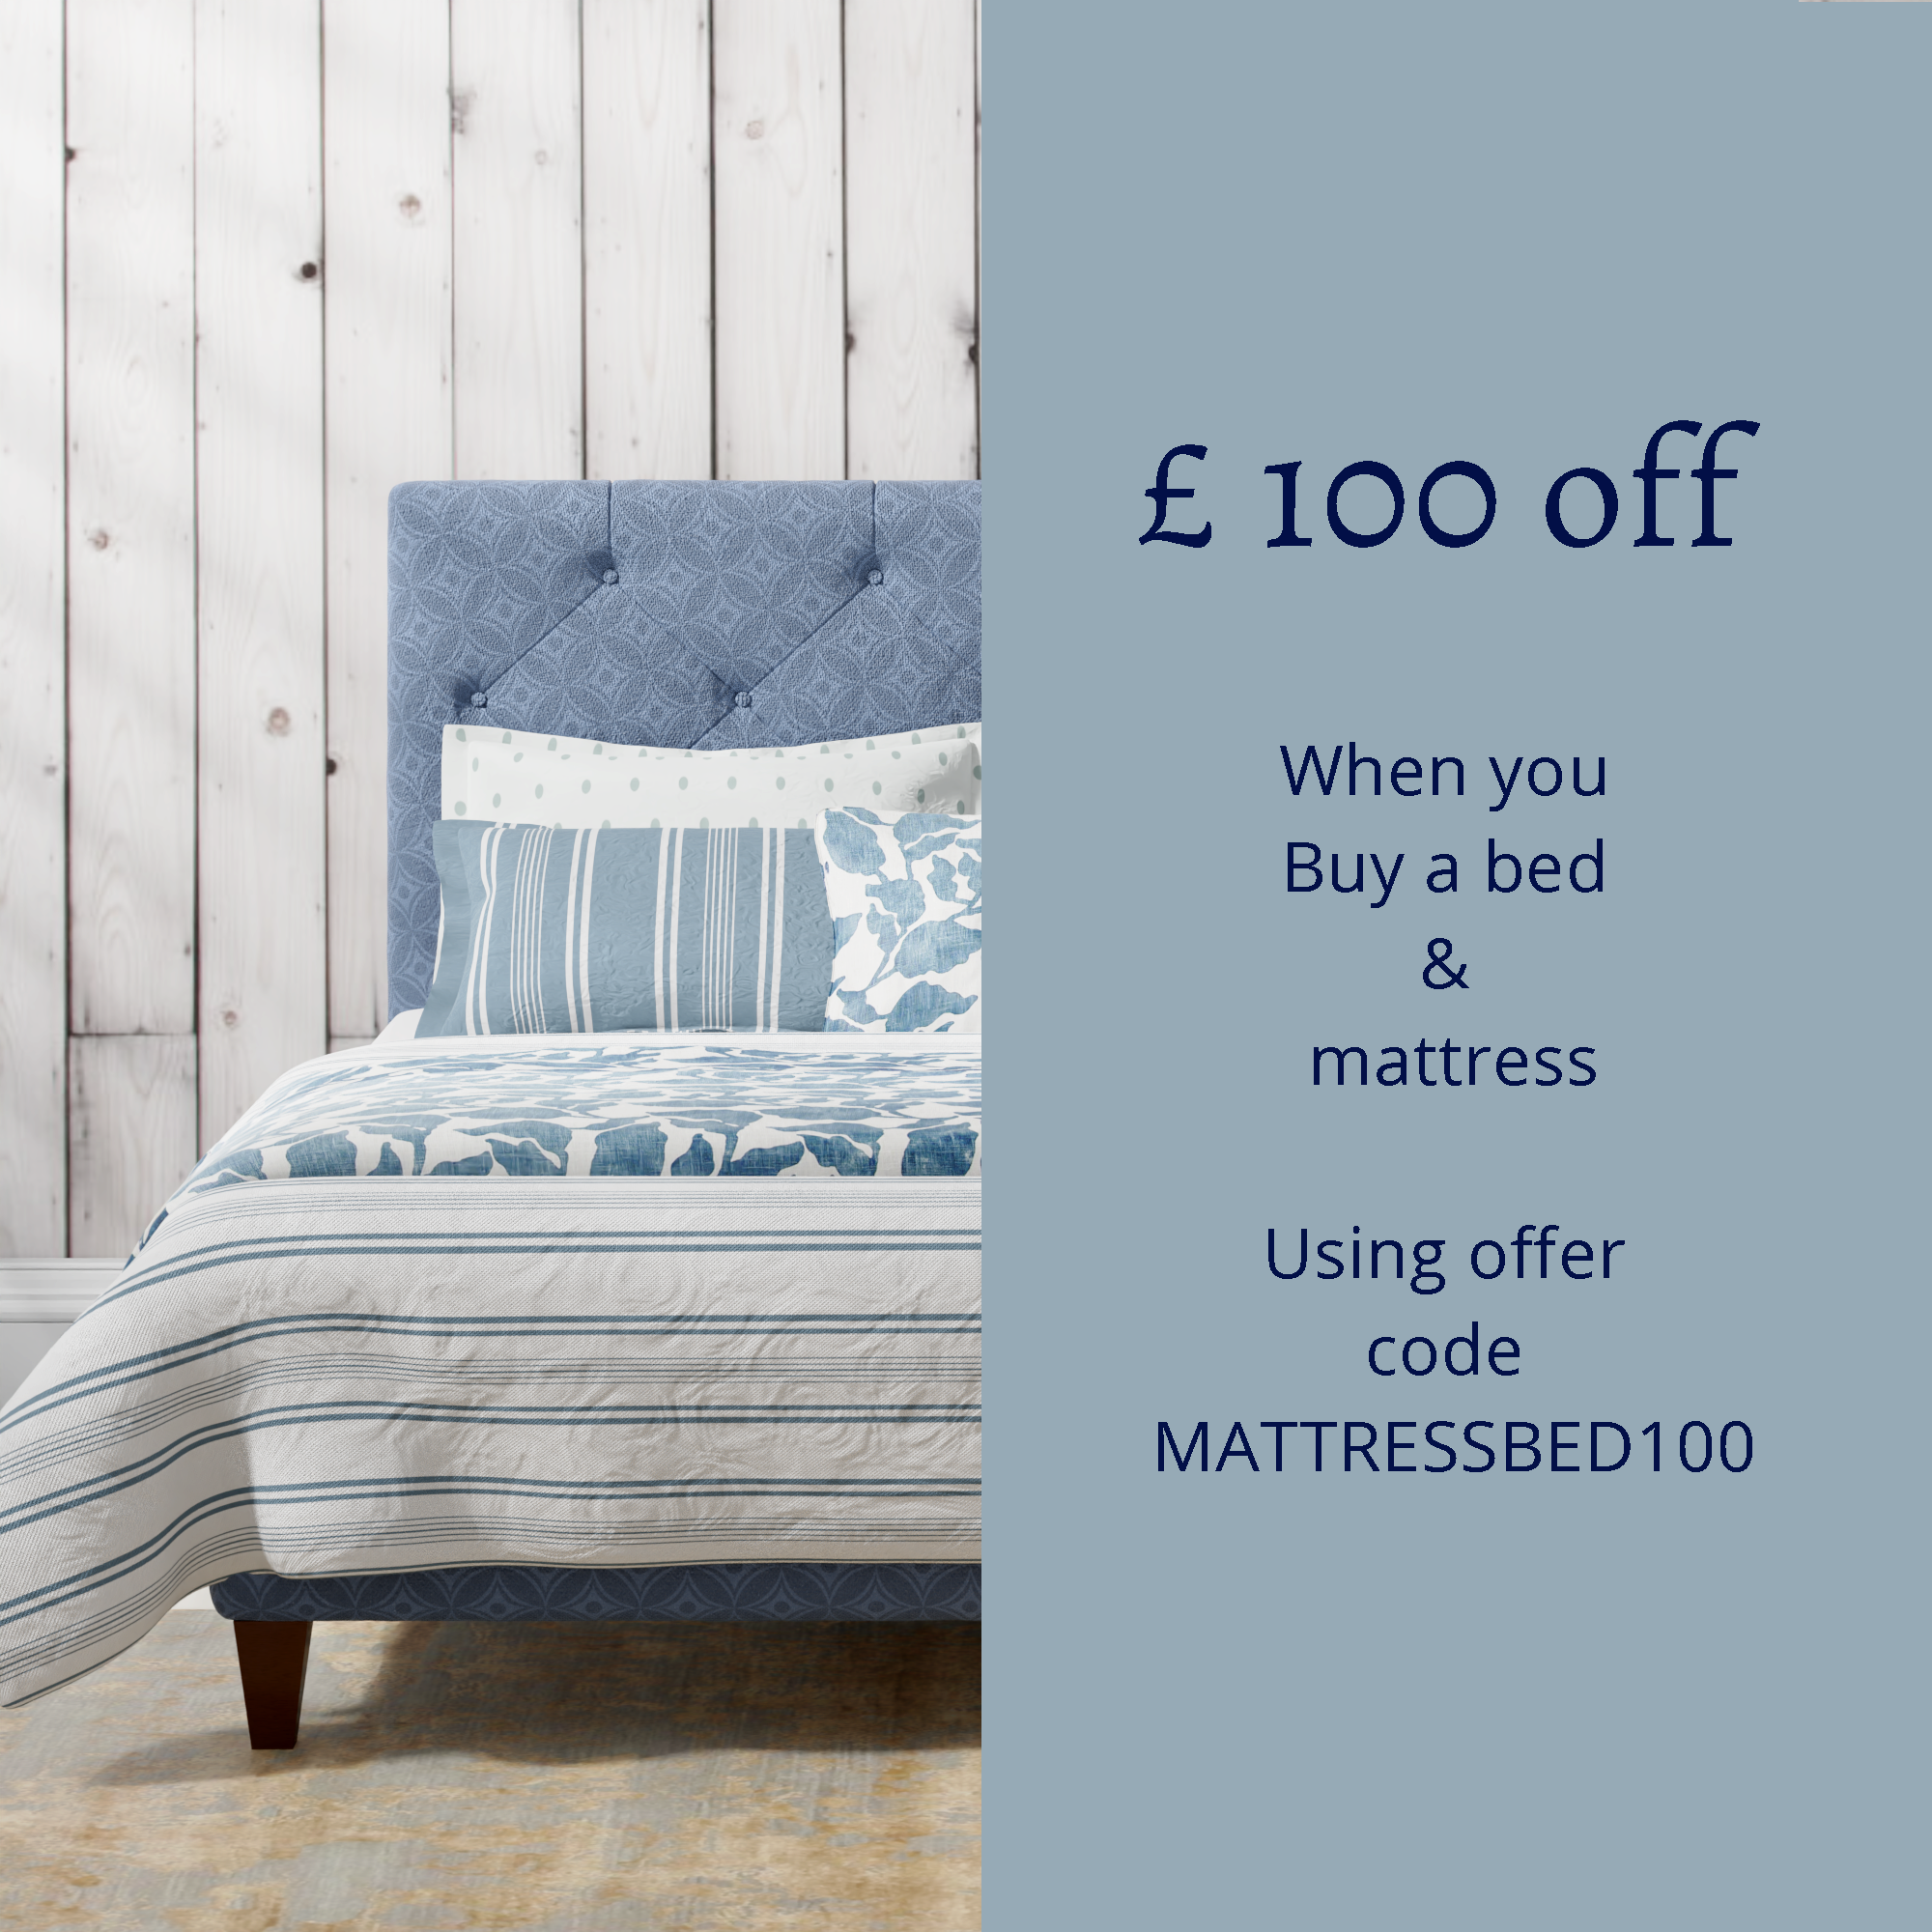 Upholstered beds & bed frames by The Original Bed Co